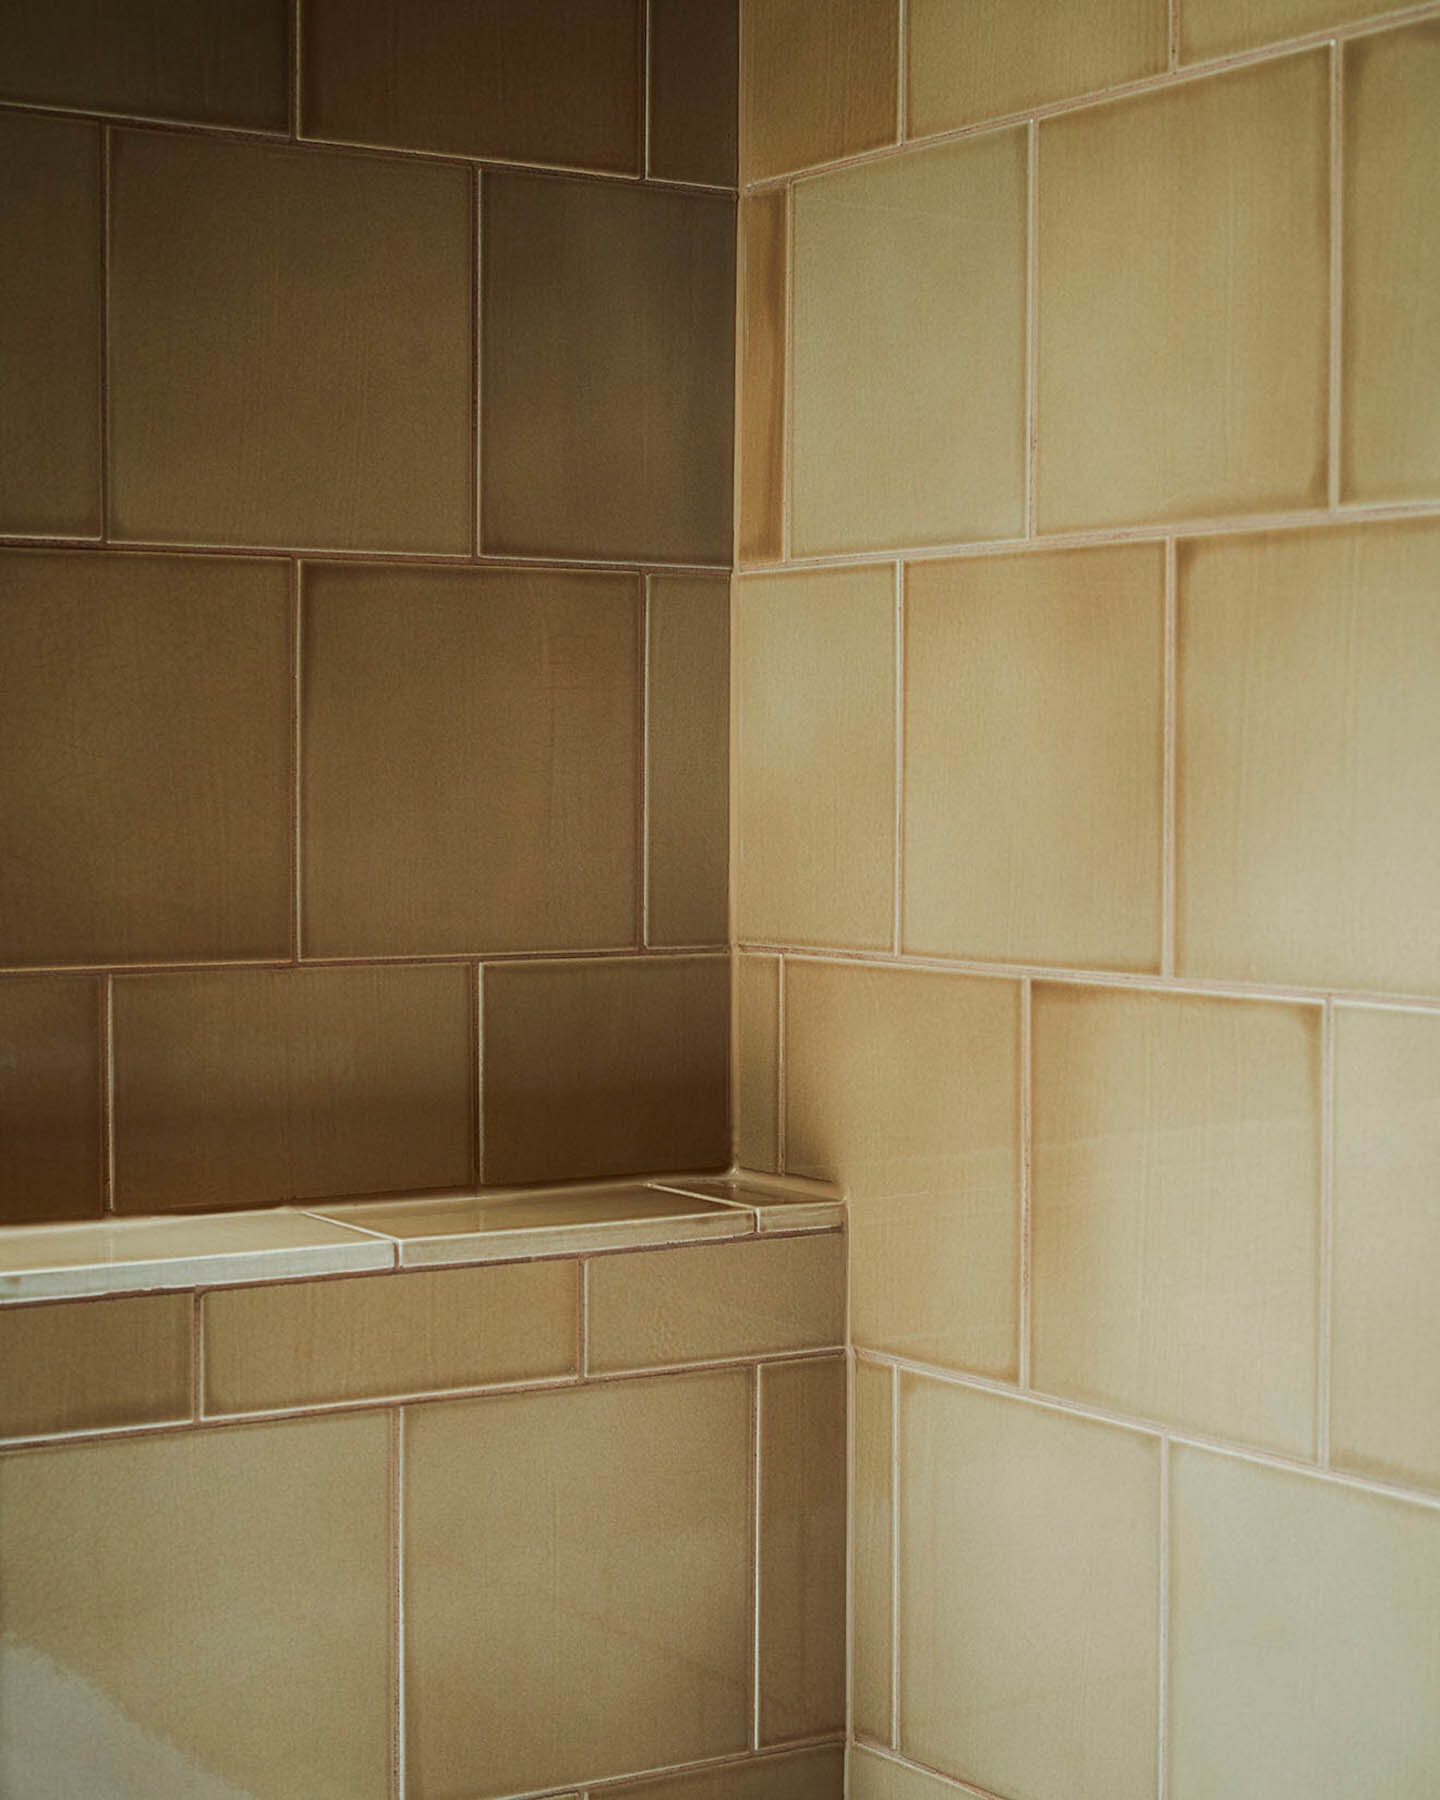 Bathroom wall with clay tiles in format 15x15x1 cm glazed with 'Sahara Sand Shiny Crystal'